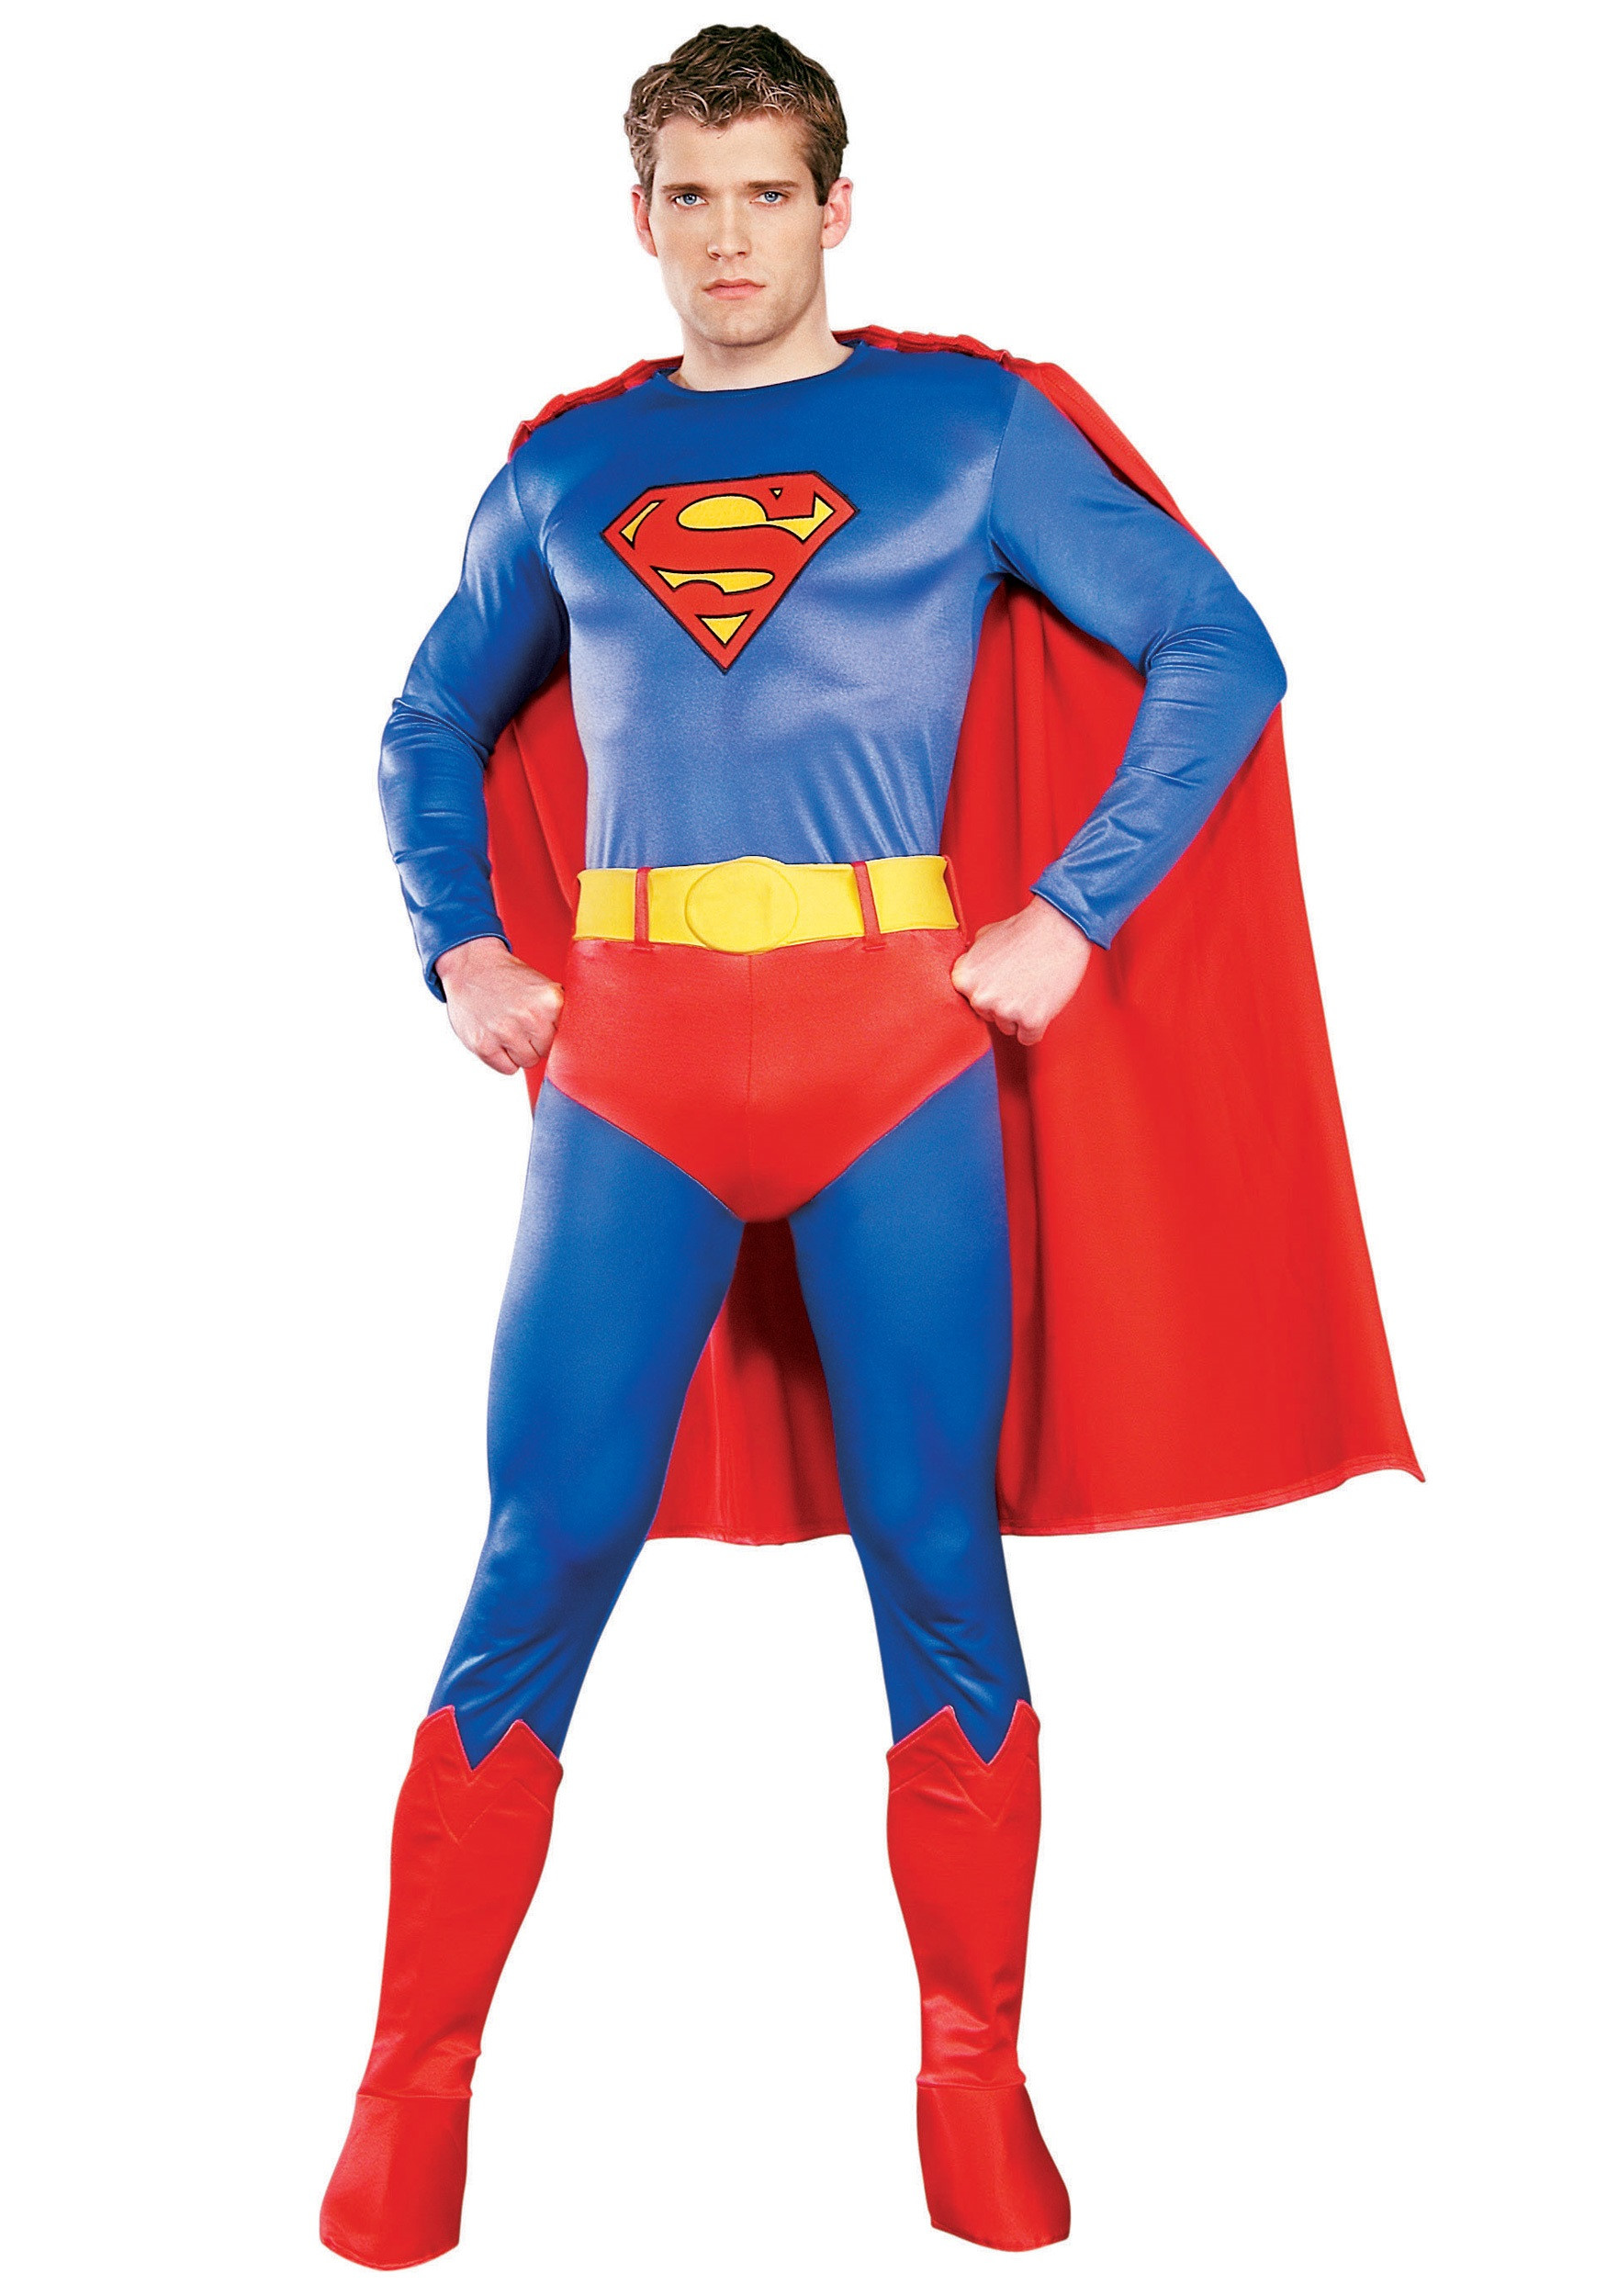 Superman Costume DIY
 Adult Authentic Superman Costume Spandex Superman